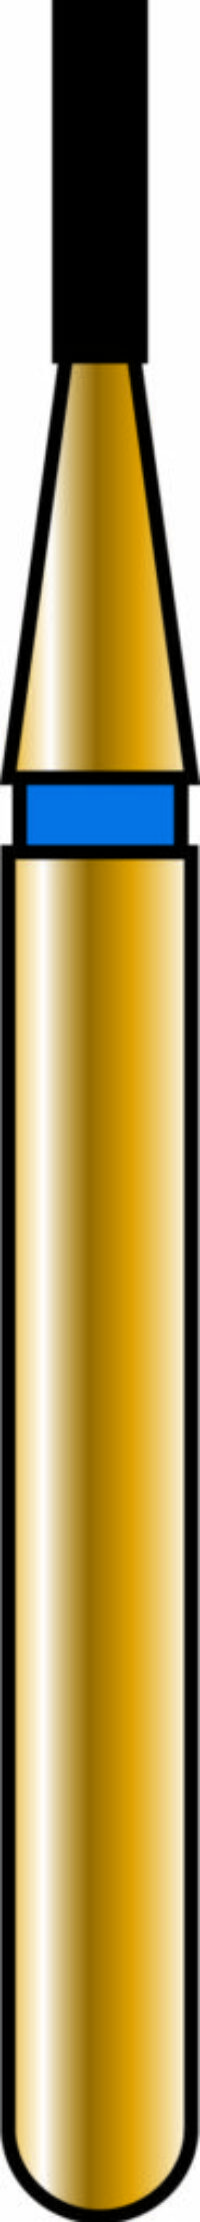 Flat End Cylinder 08-3mm Gold Diamond Bur